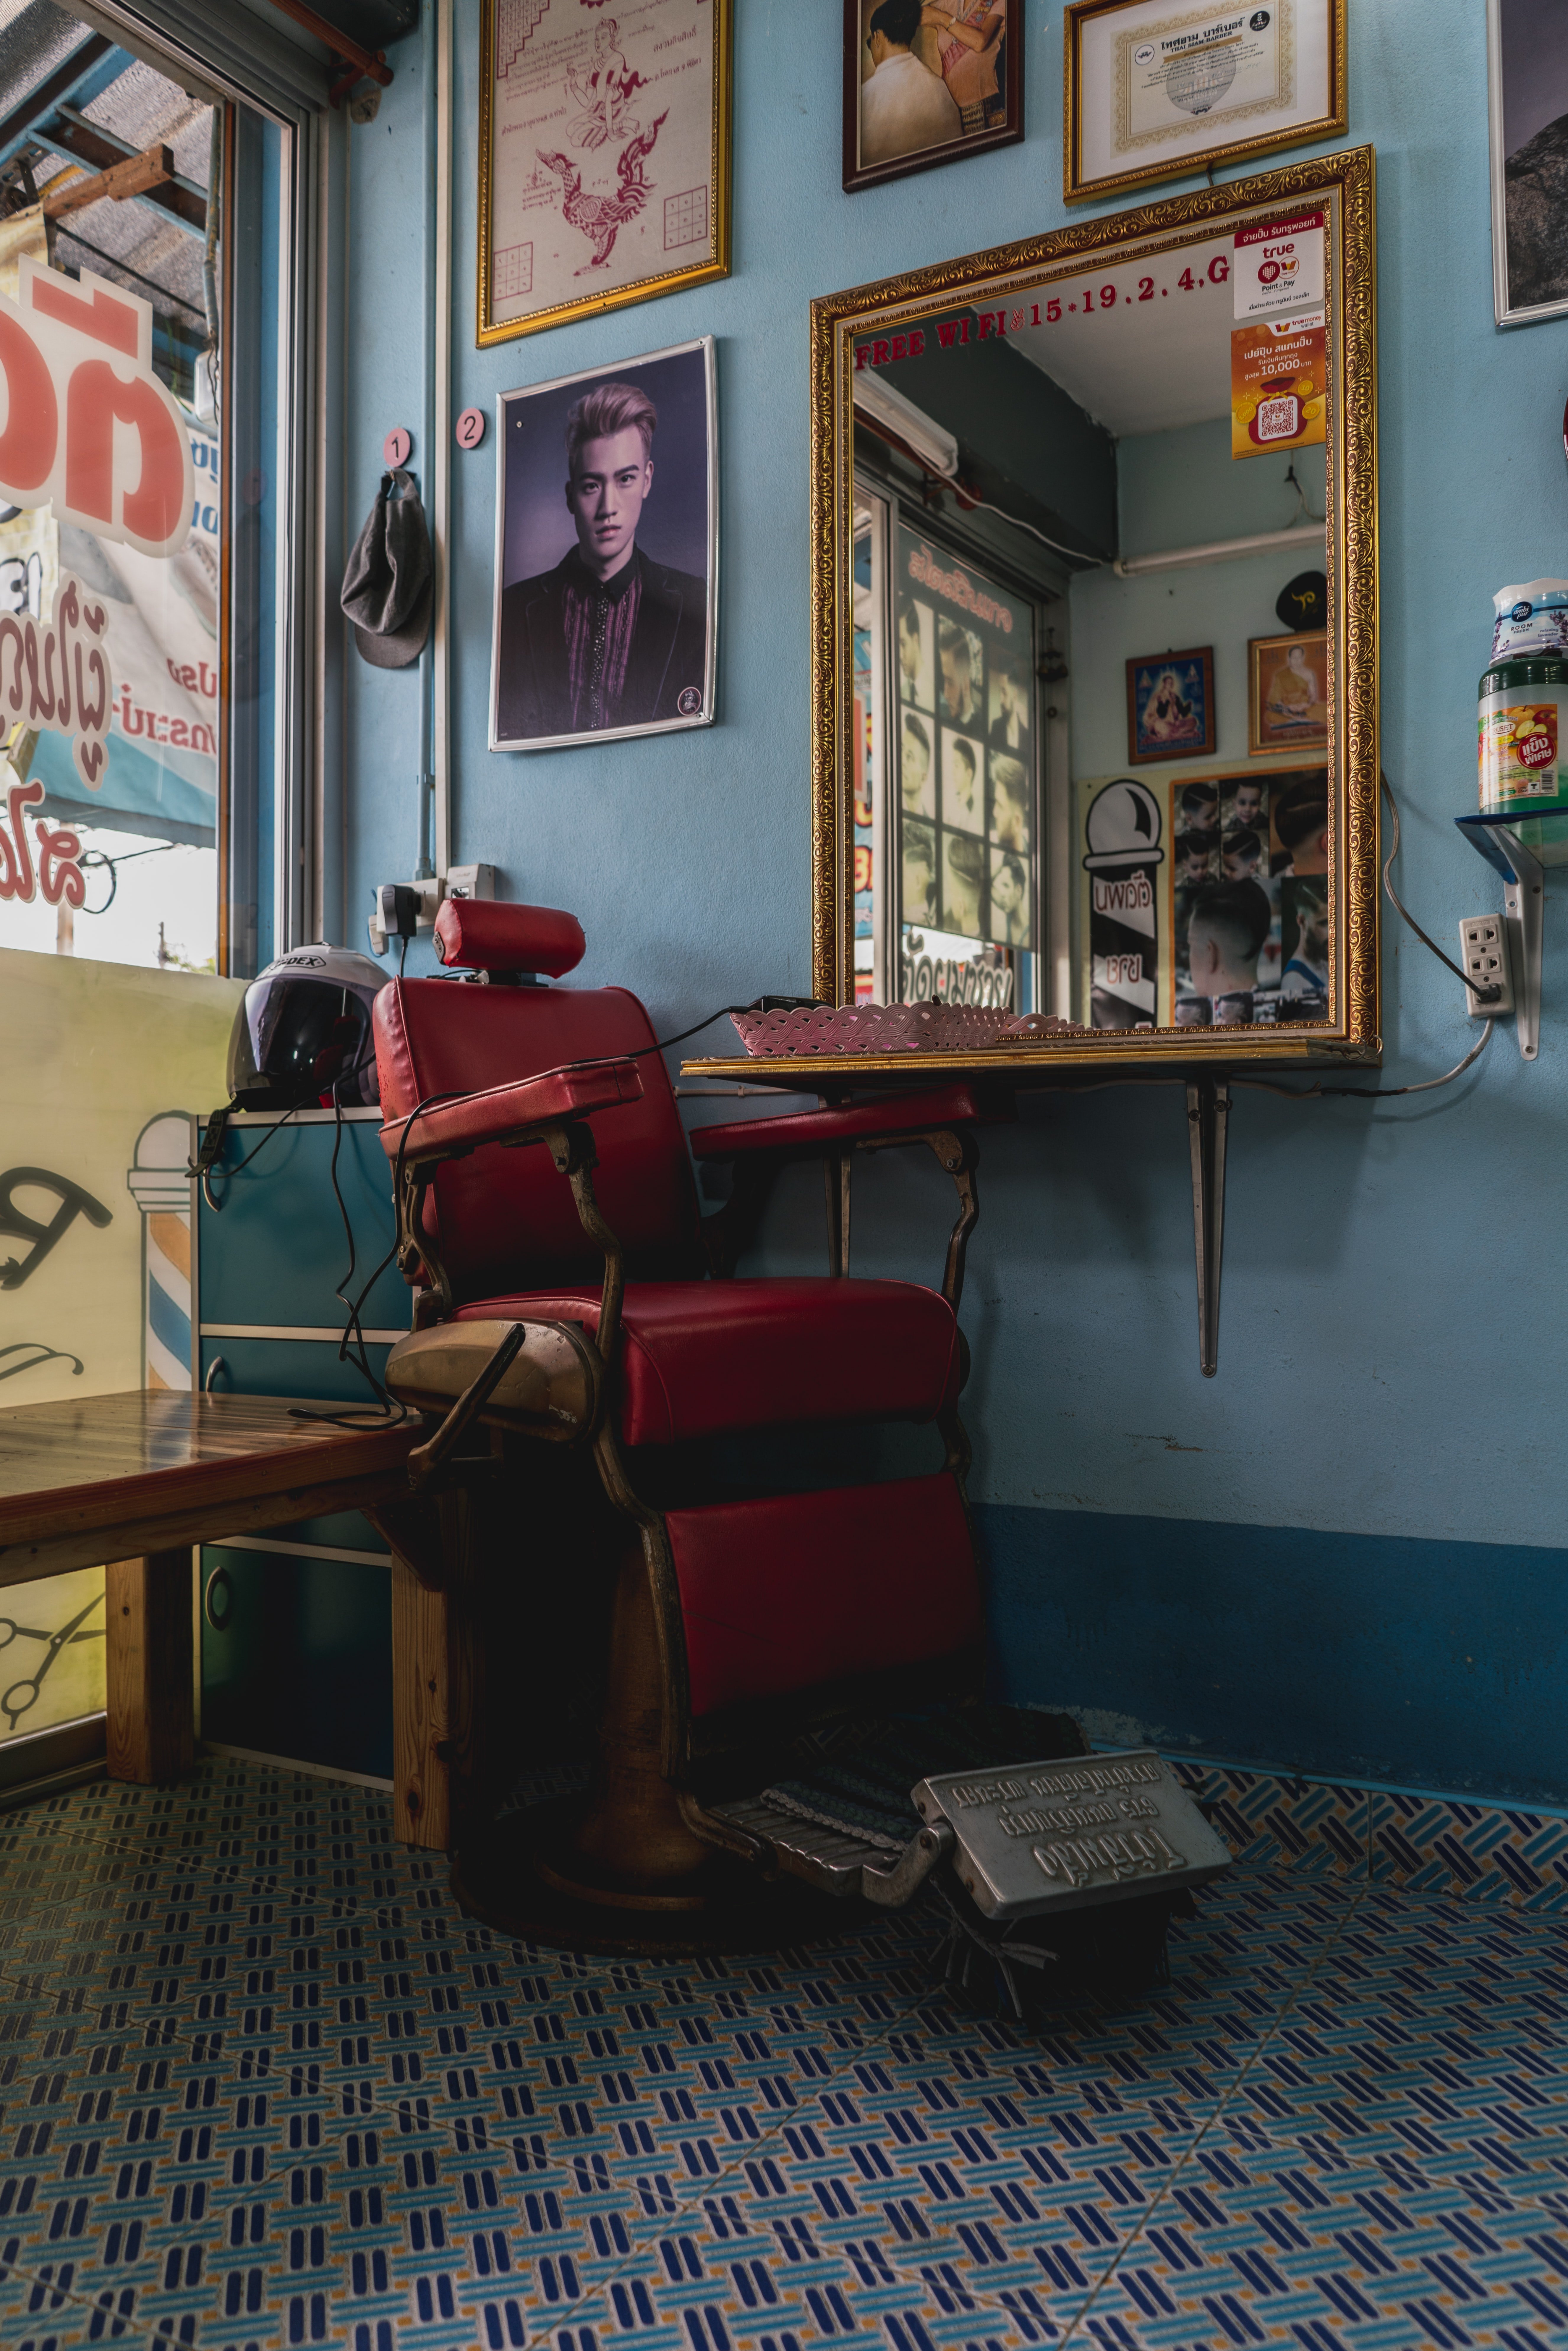 Jordan sat in a comfortable red barber chair. | Source: Unsplash